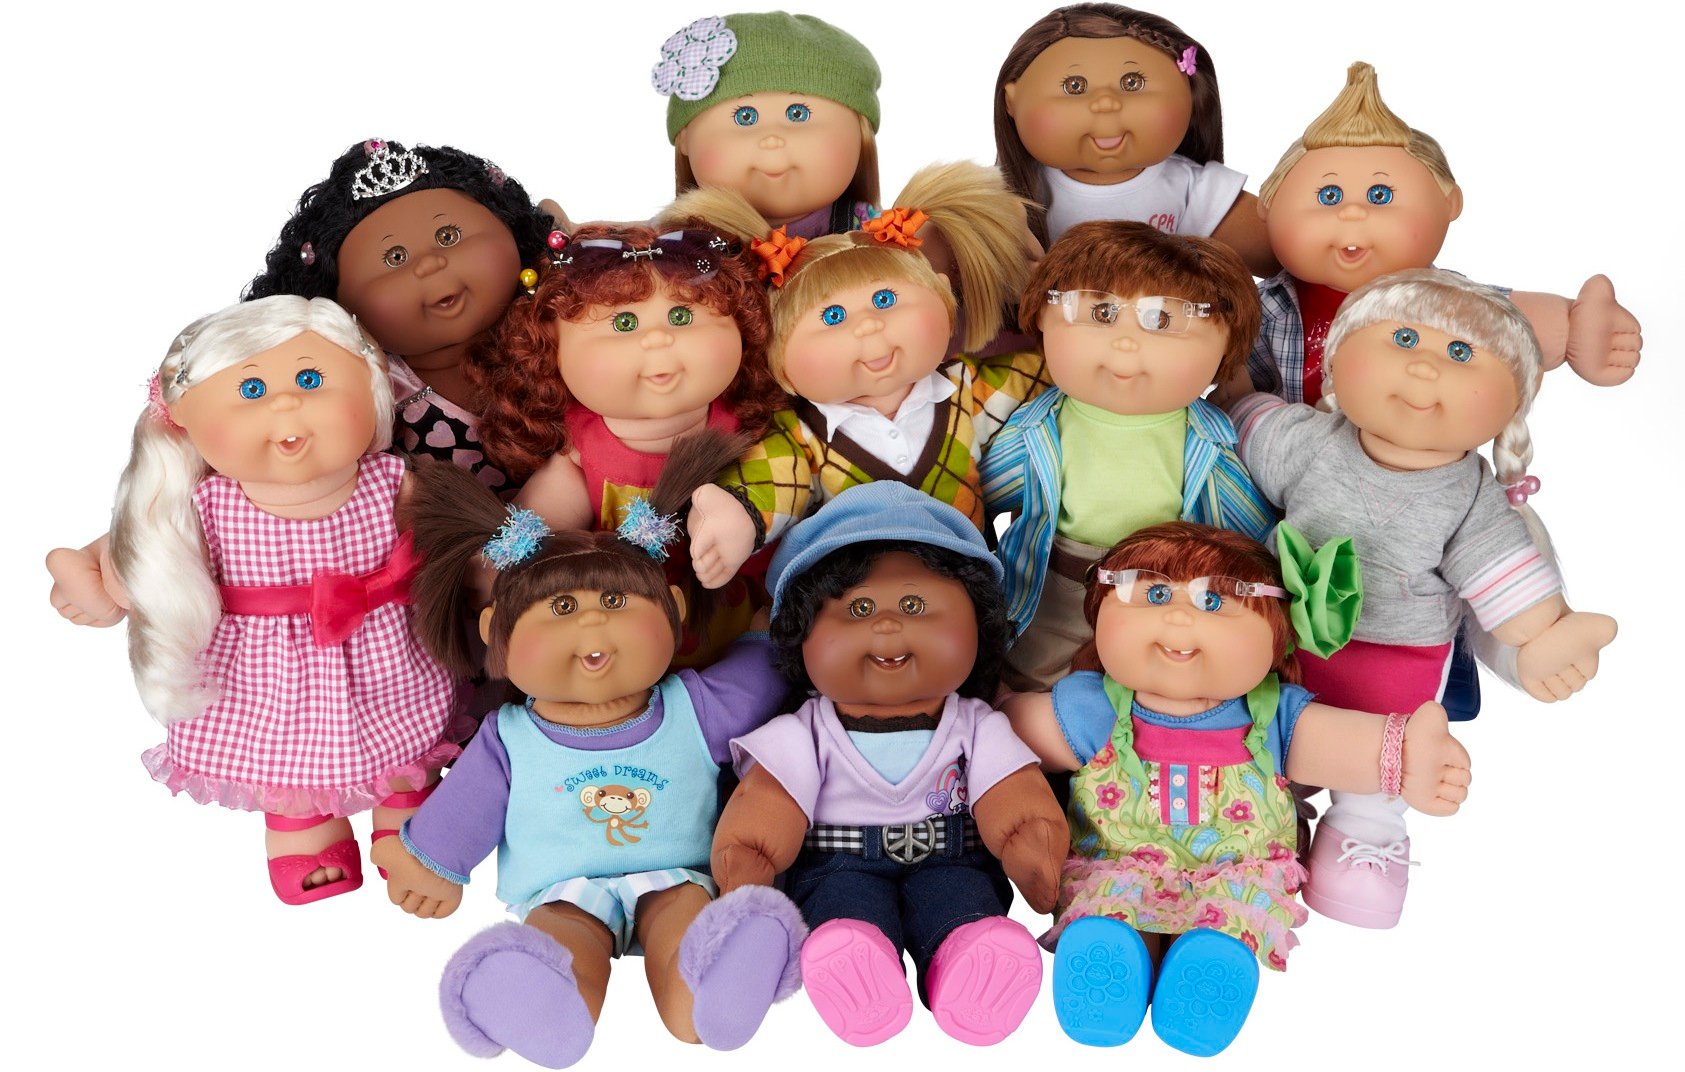 Cabbage Patch Kids dolls